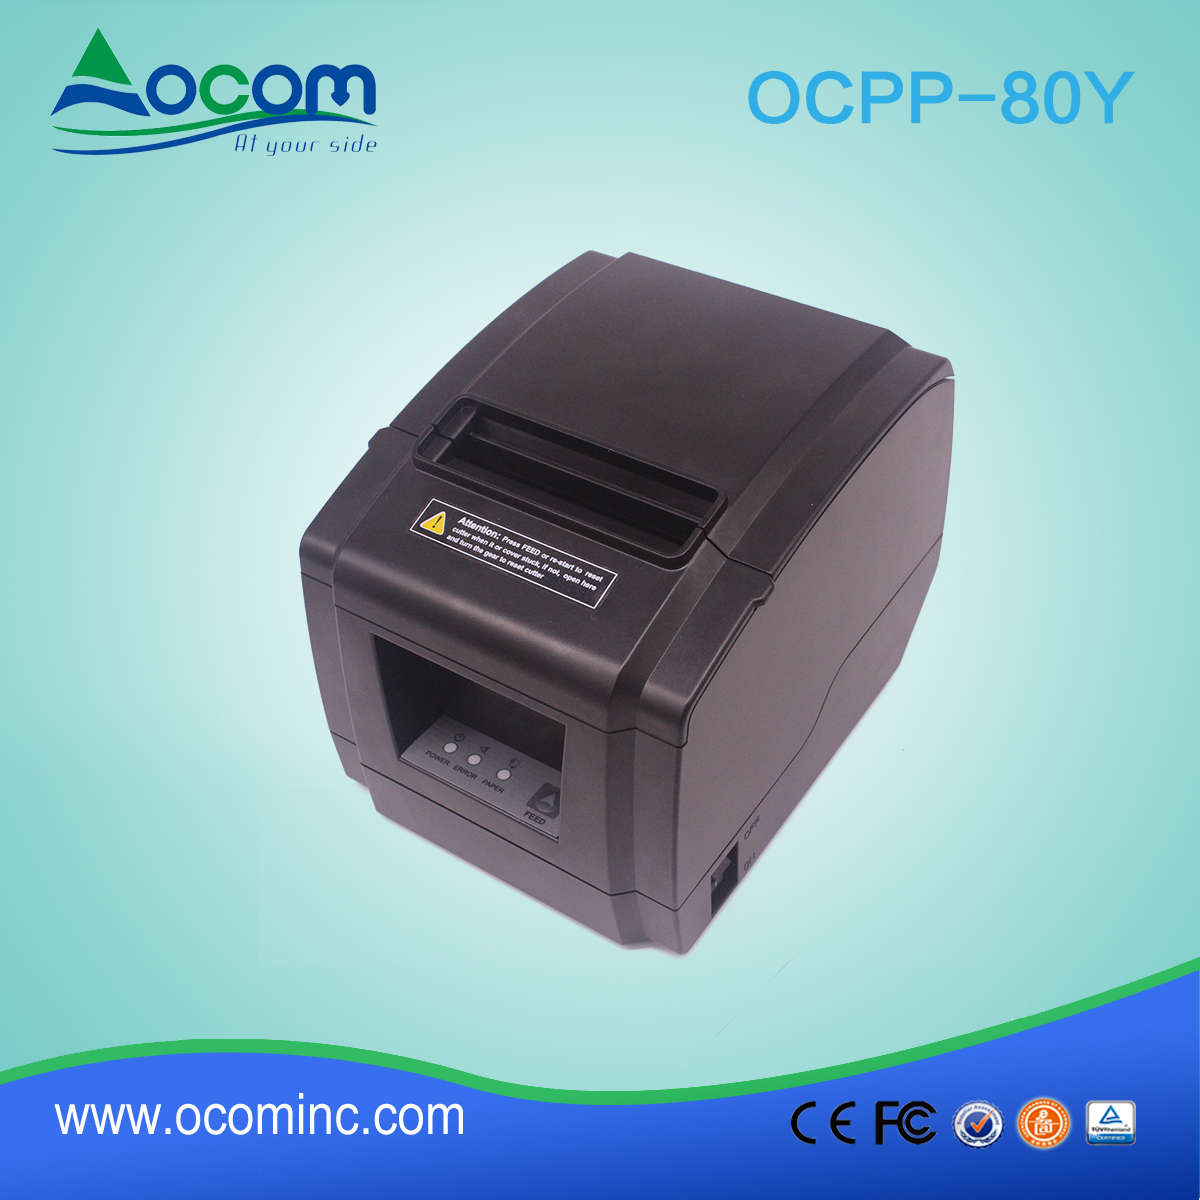 OCPP-80Y Низкозатратный 80-мм термопринтер-принтер